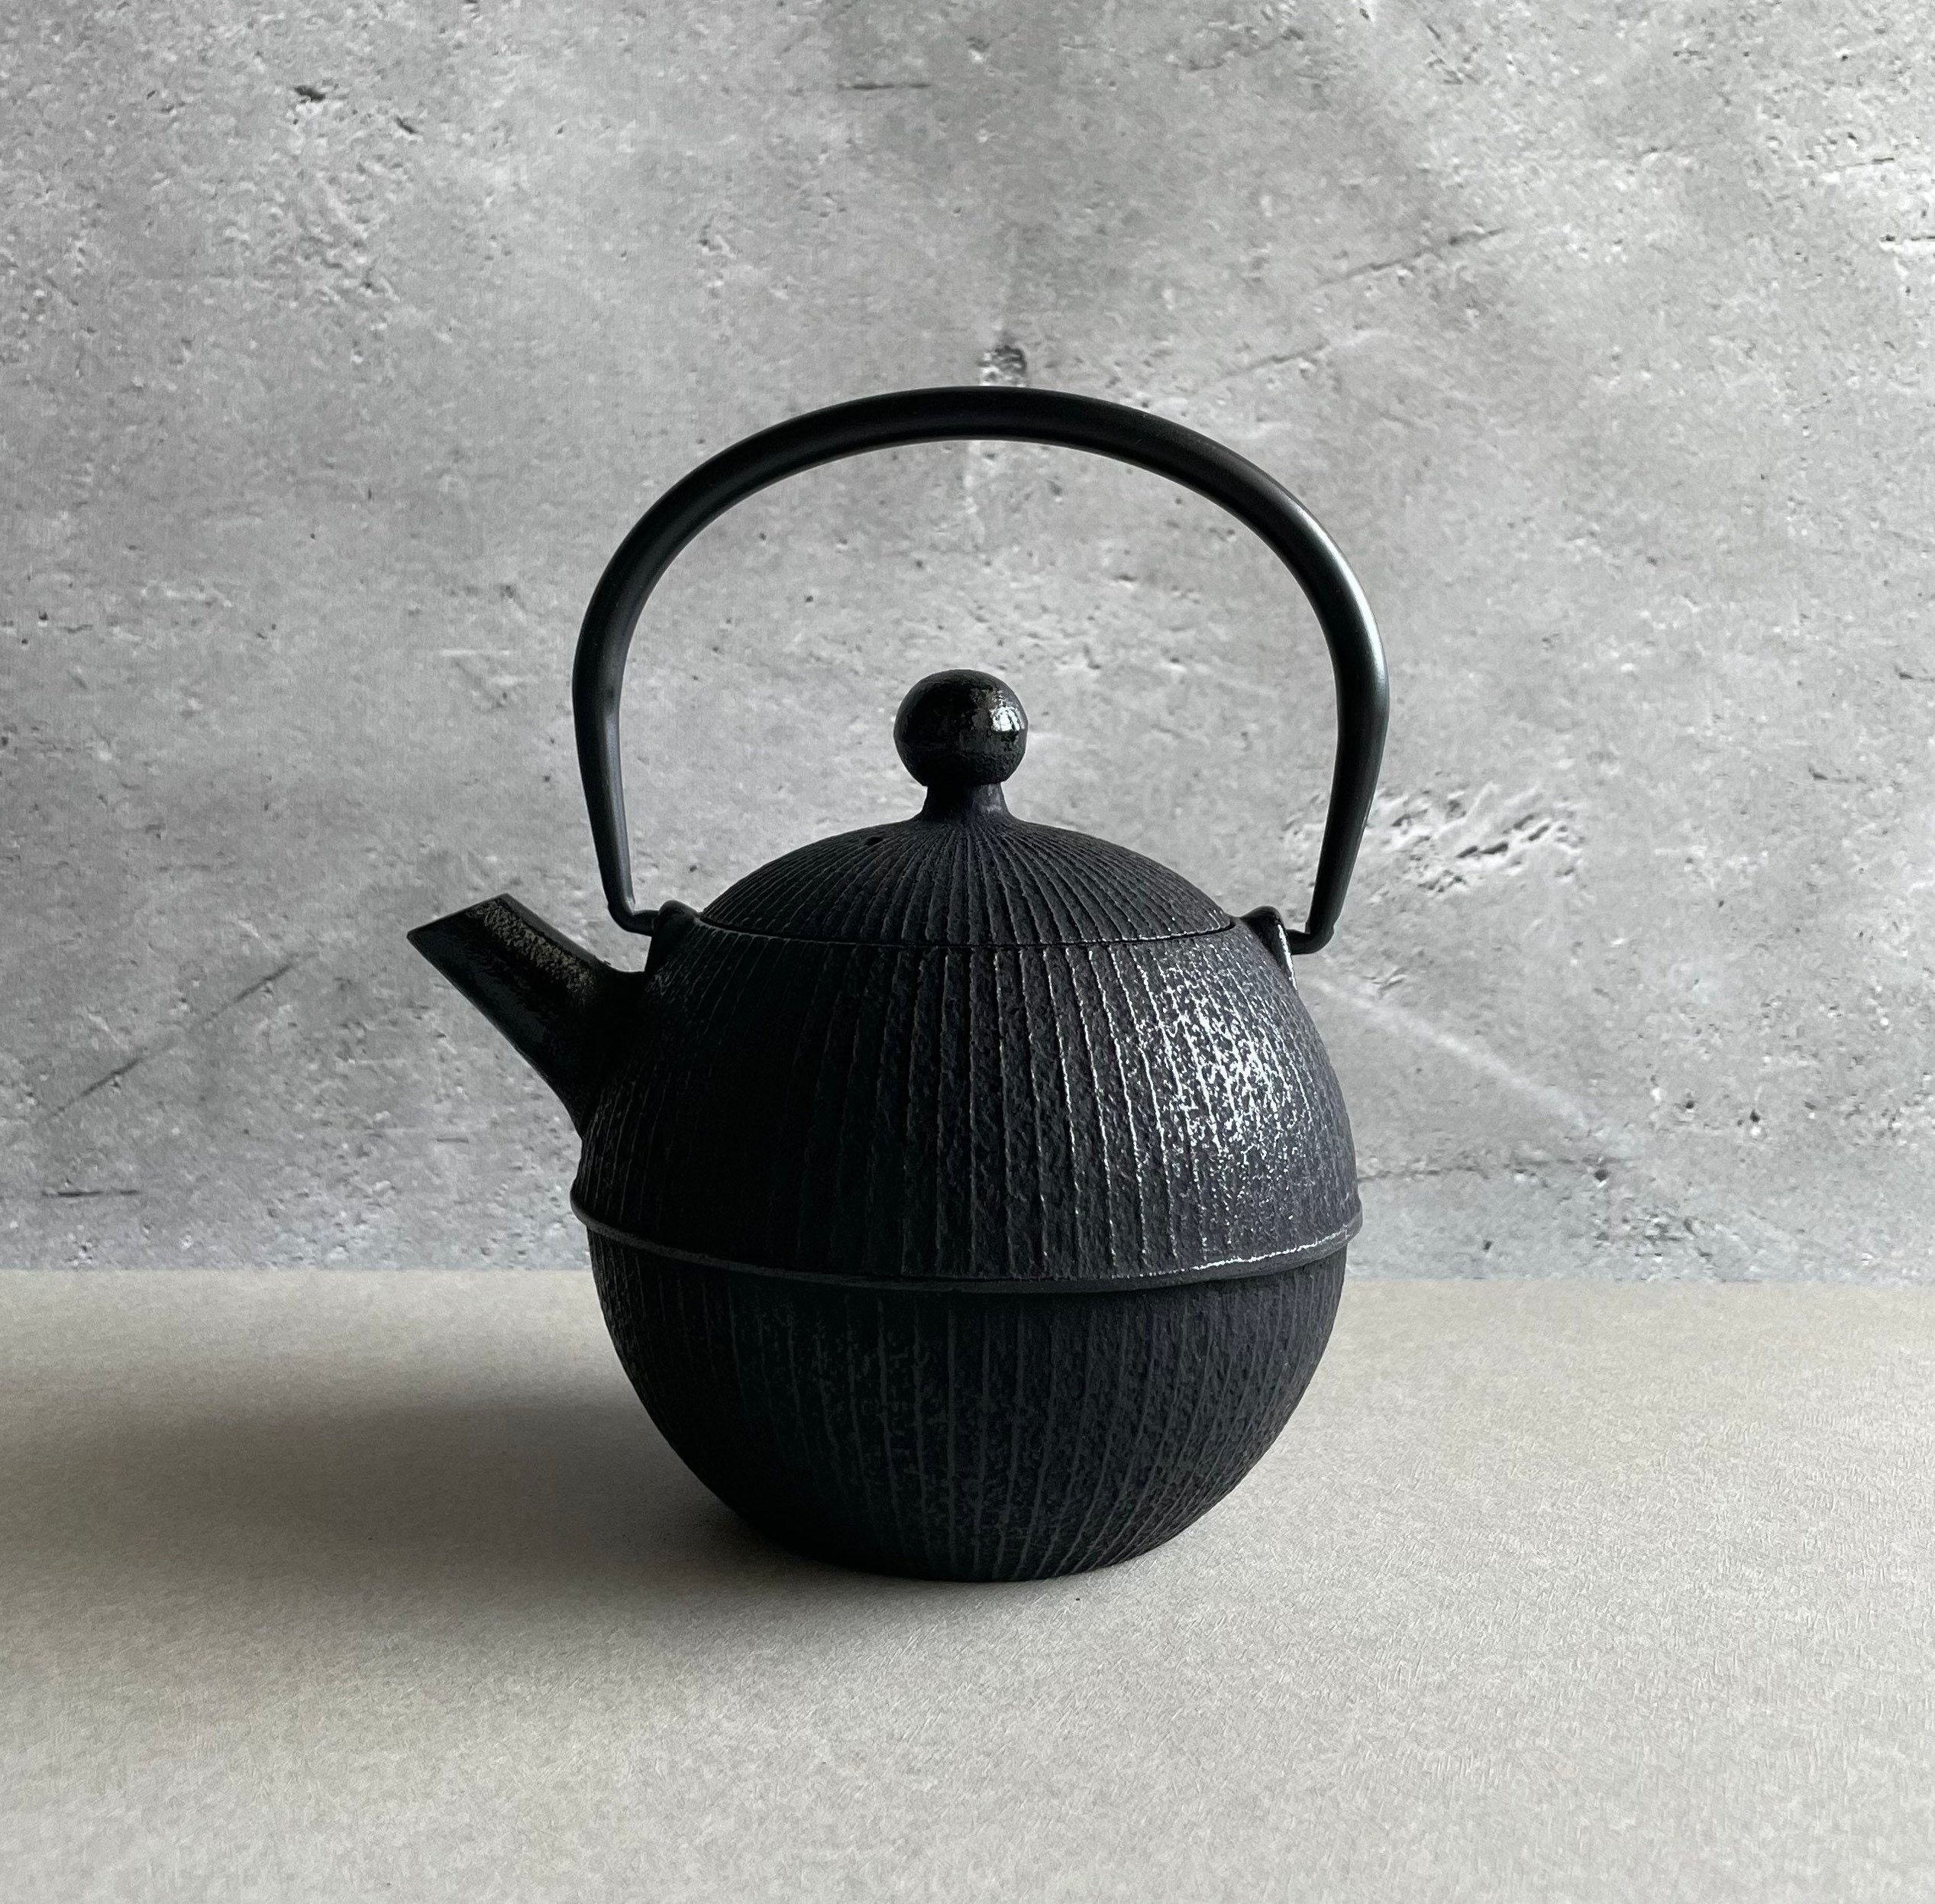 Chinese cast iron teapot - Tao 1,1 L - Black